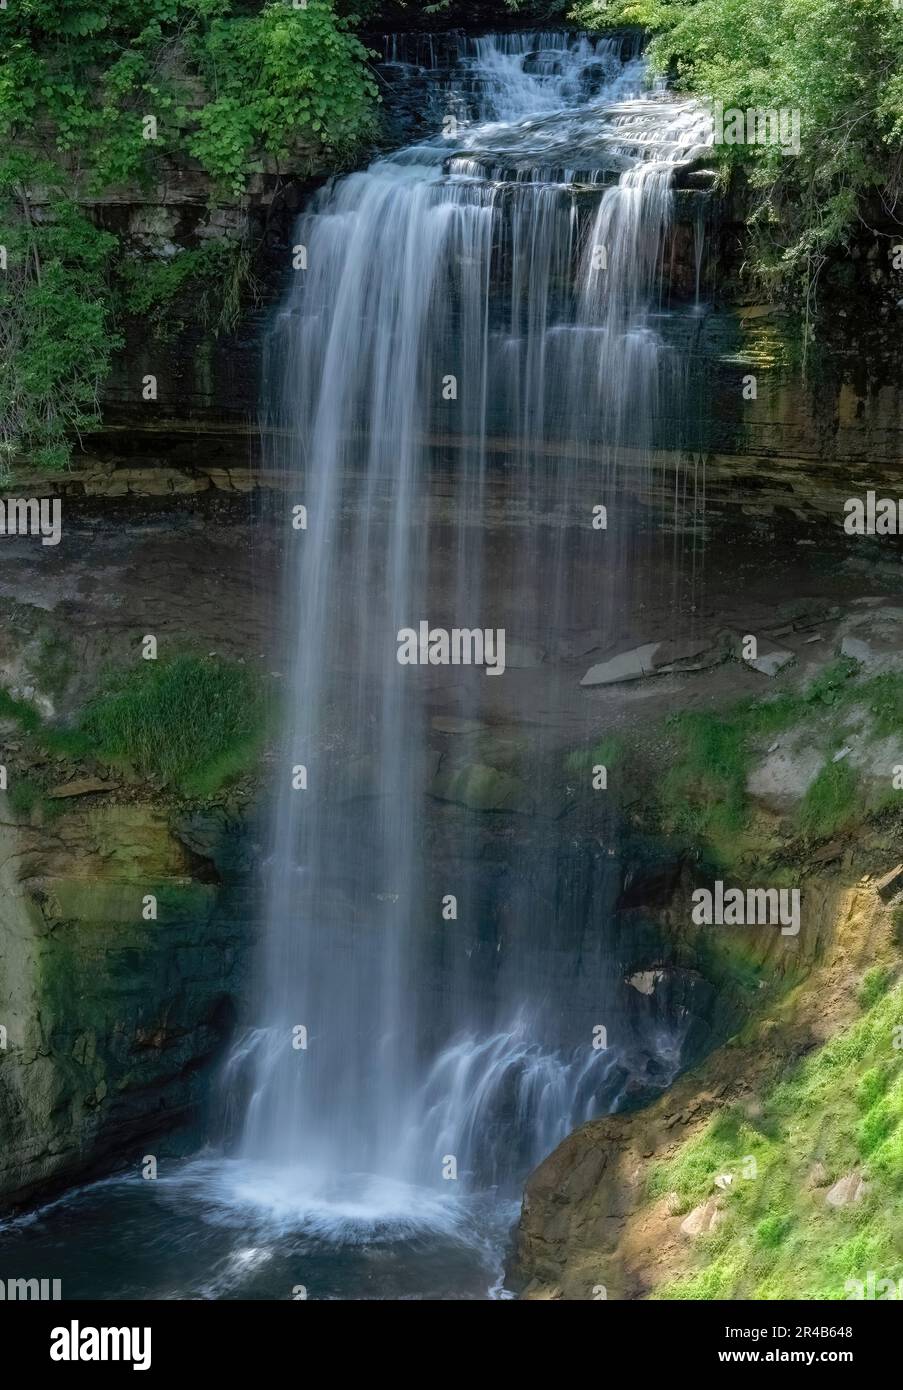 Minnehaha Falls waterfall on a summer day in Minnehaha Park in Minneapolis, Minnesota USA. Stock Photo